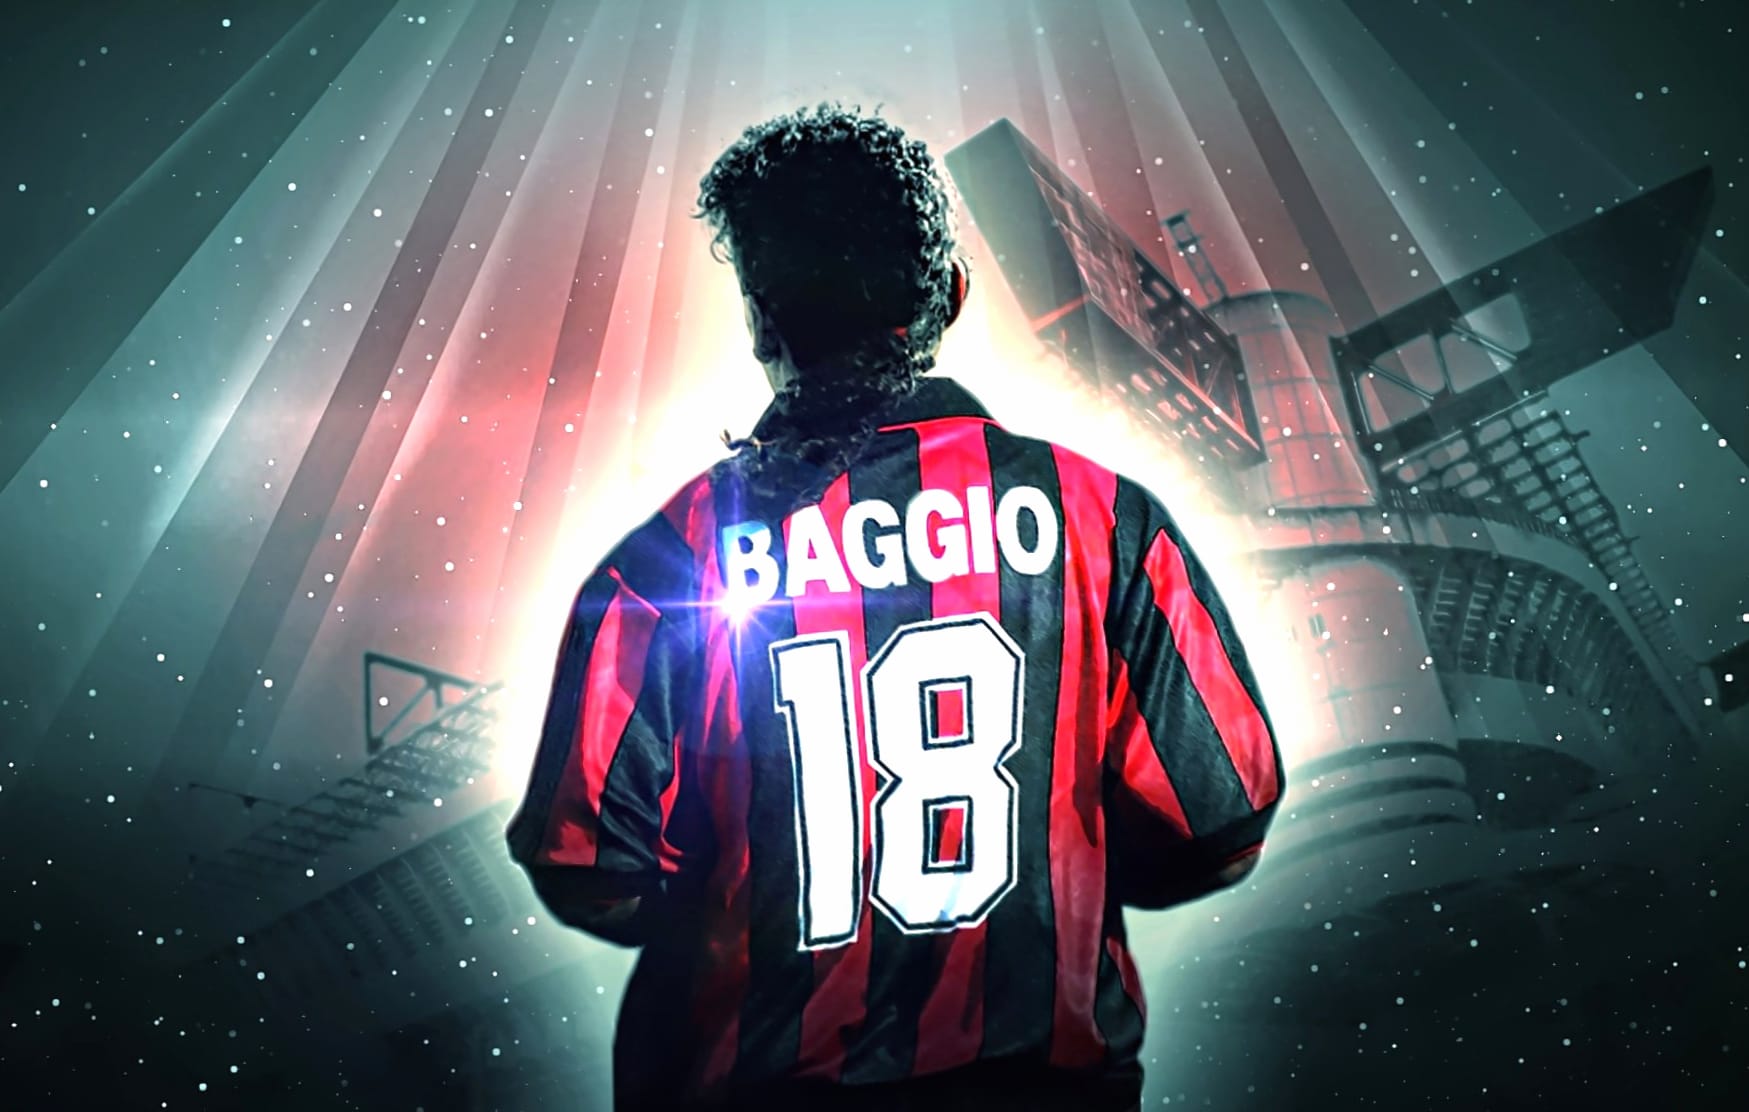 Roberto Baggio at 2048 x 2048 iPad size wallpapers HD quality